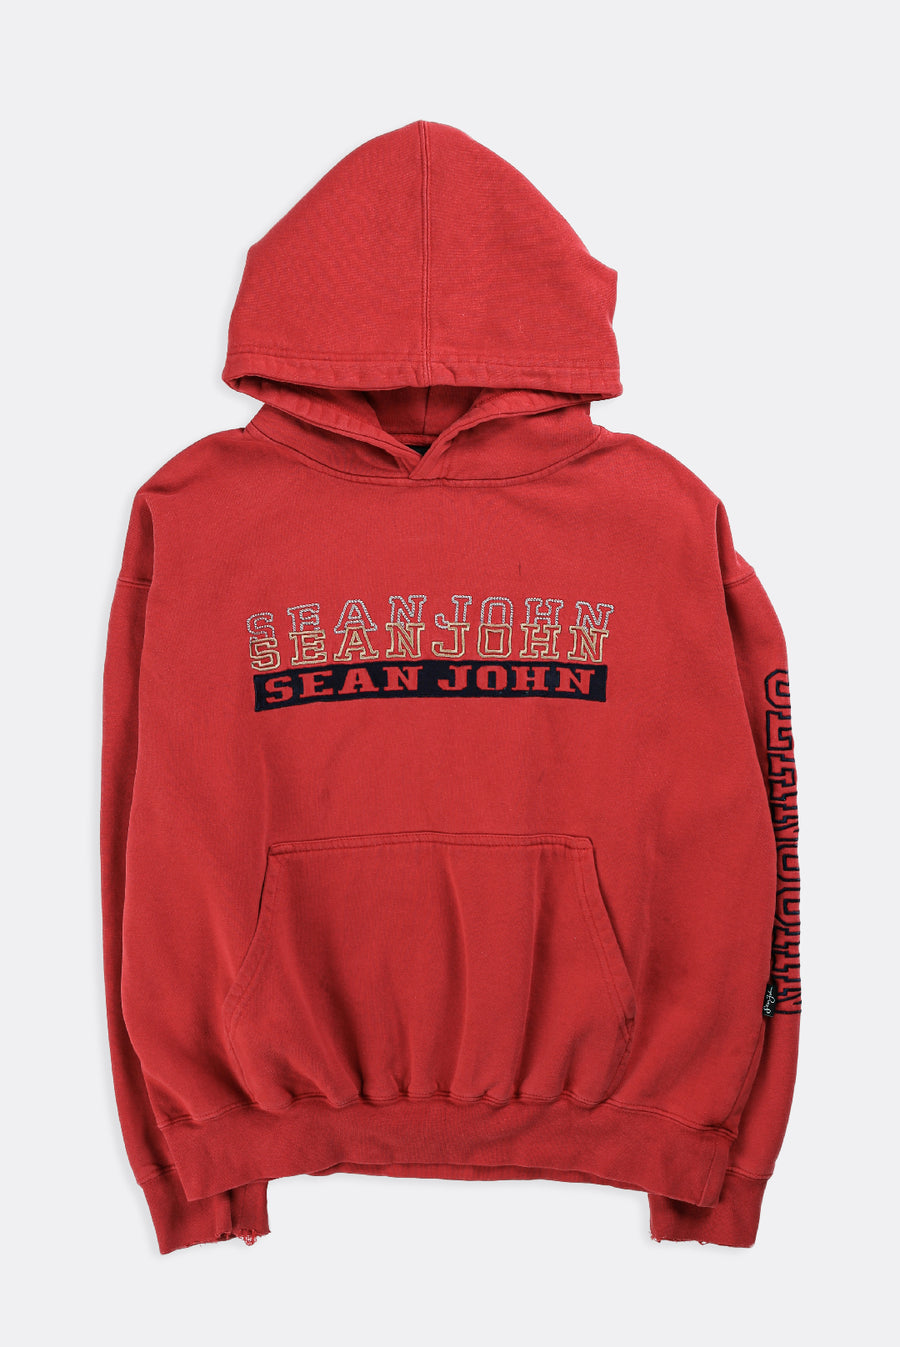 Vintage Sean John Sweatshirt